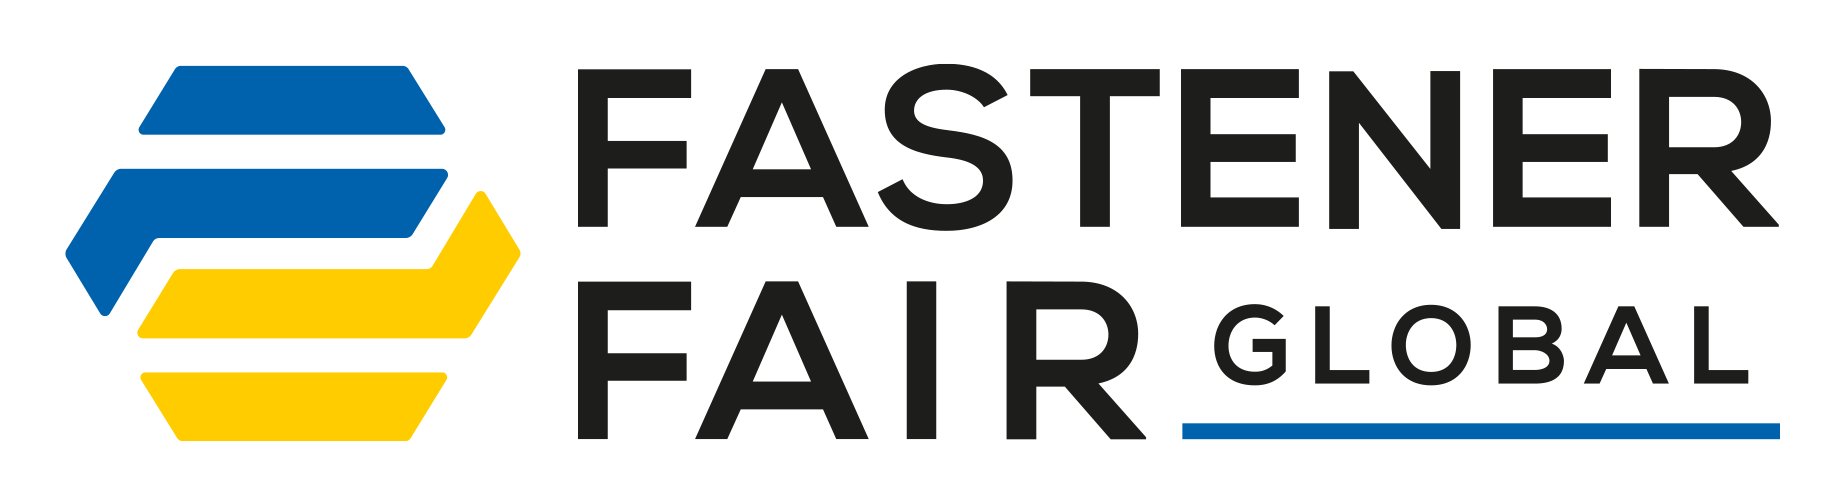 Fastener Fair Global Logo